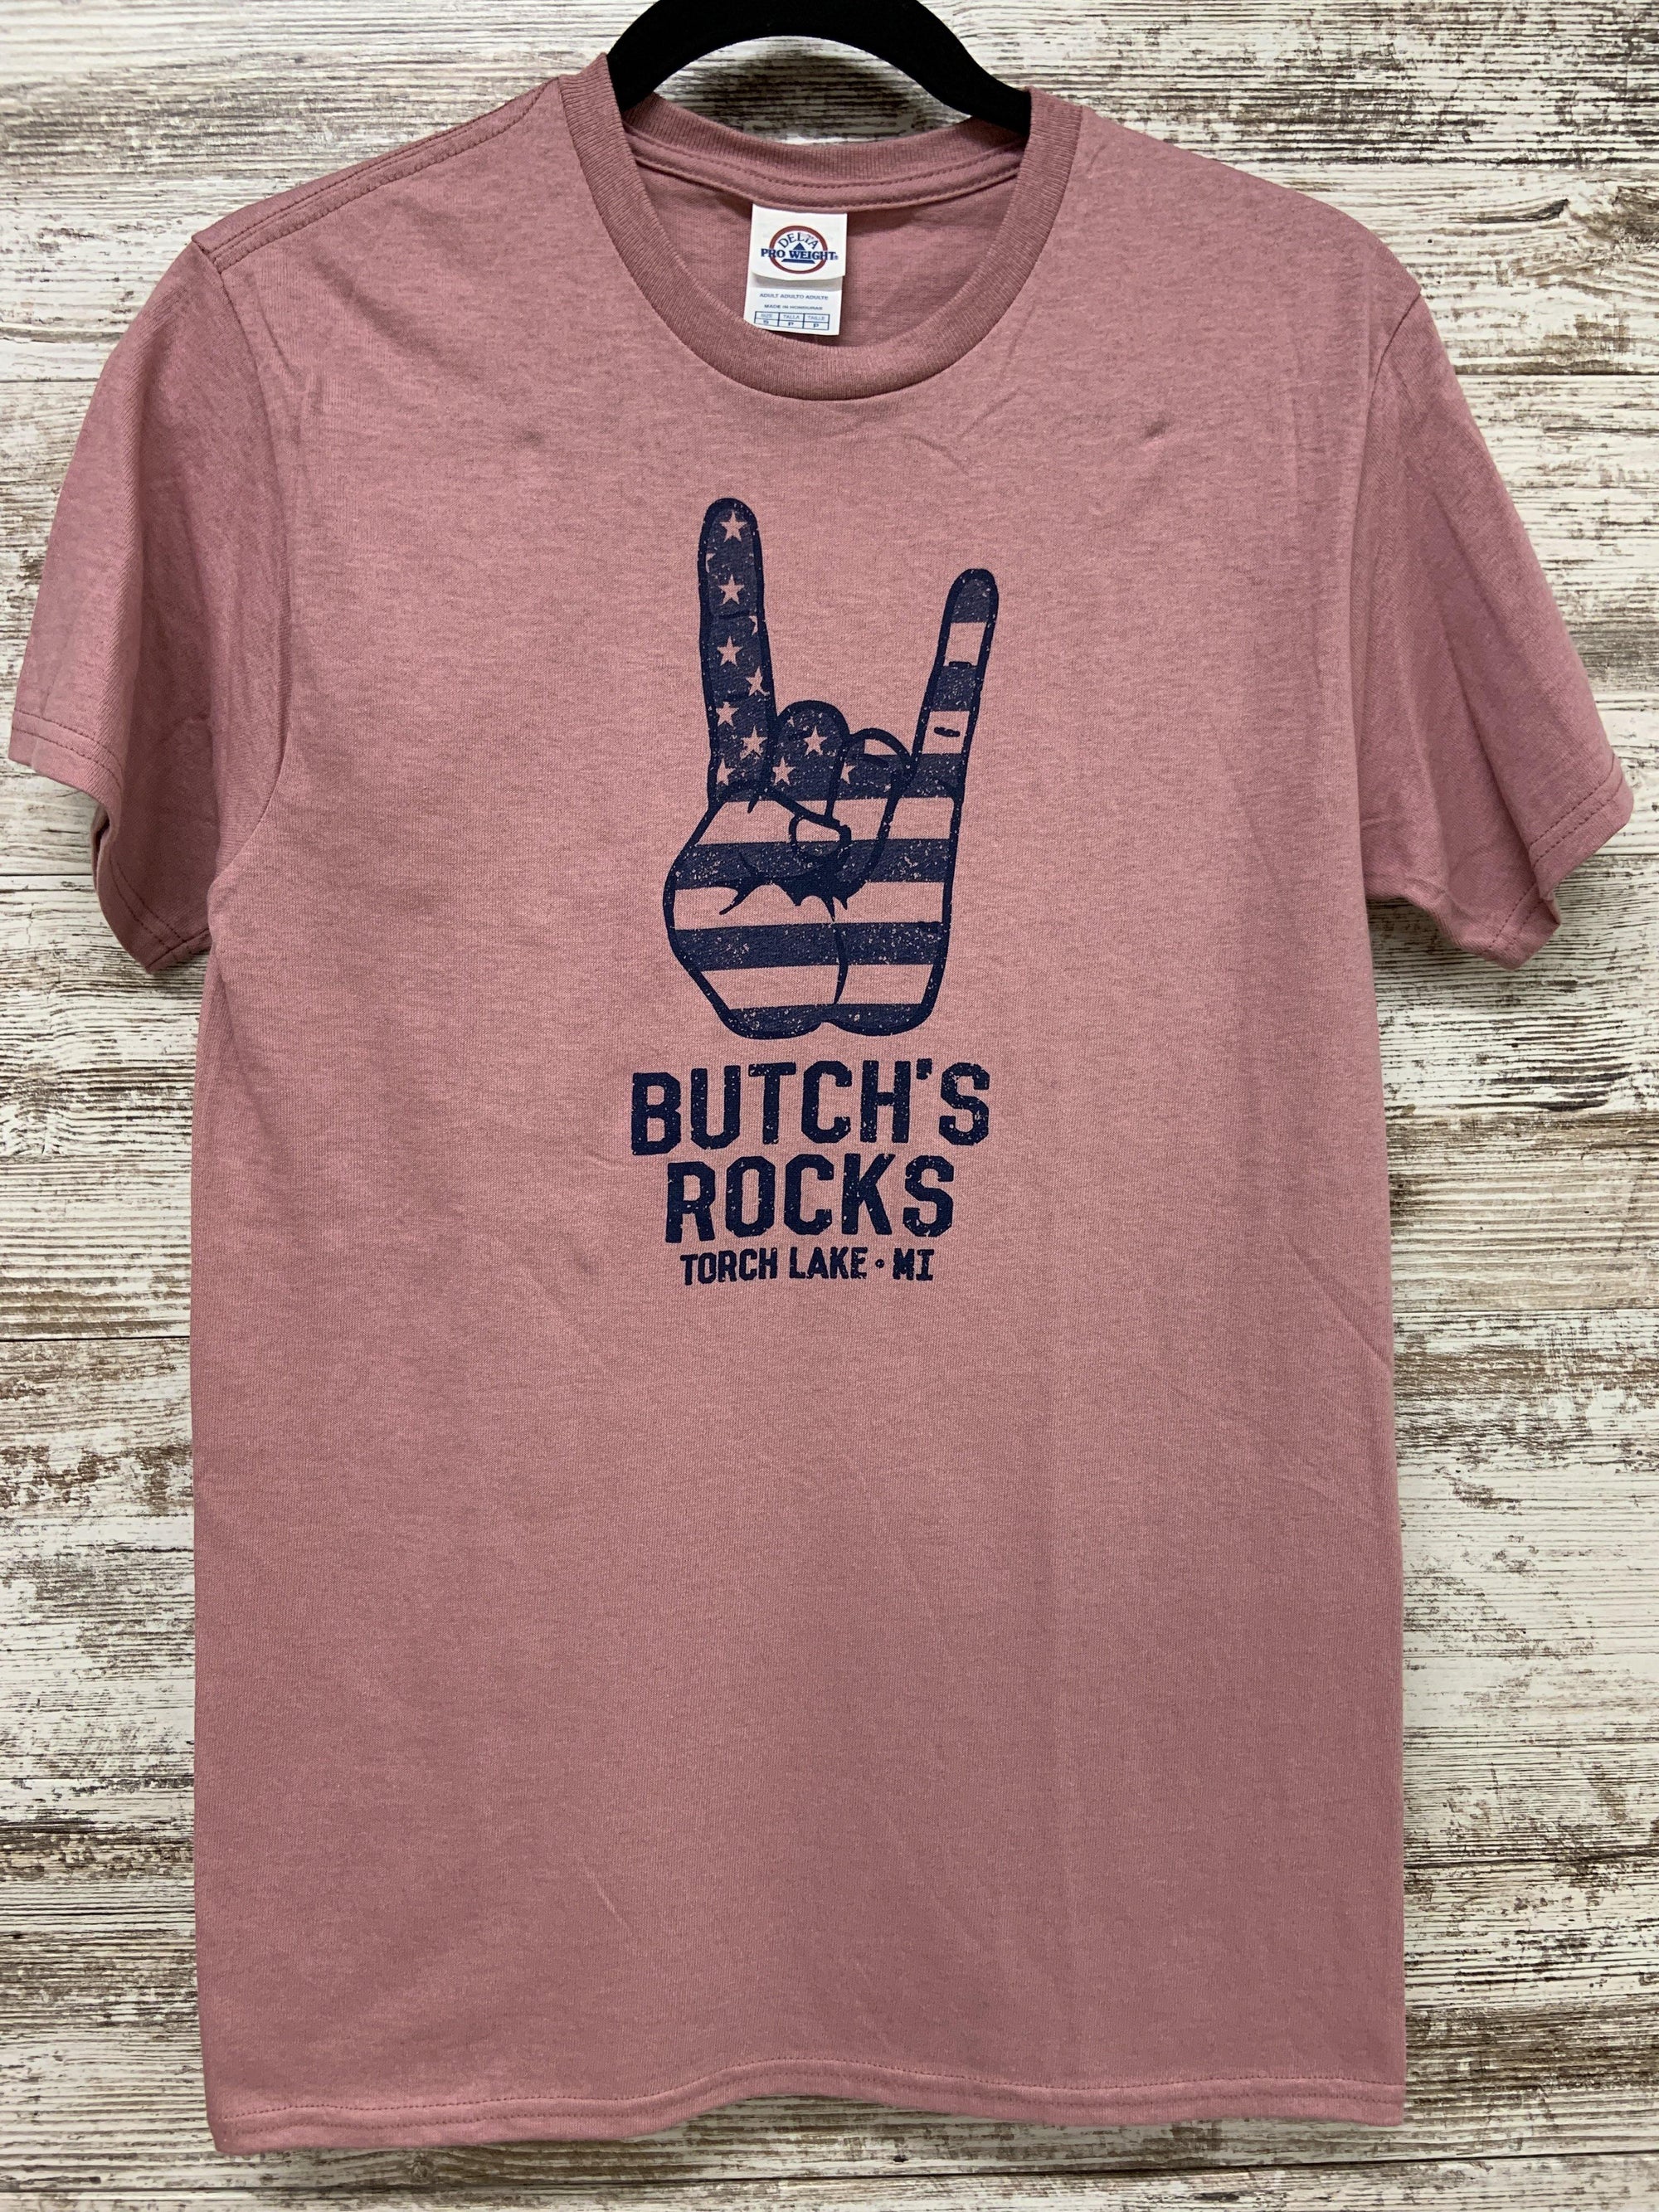 Butch's Rocks Tshirt - Butch's Tackle & Marine - Pontoon Rentals on Torch Lake